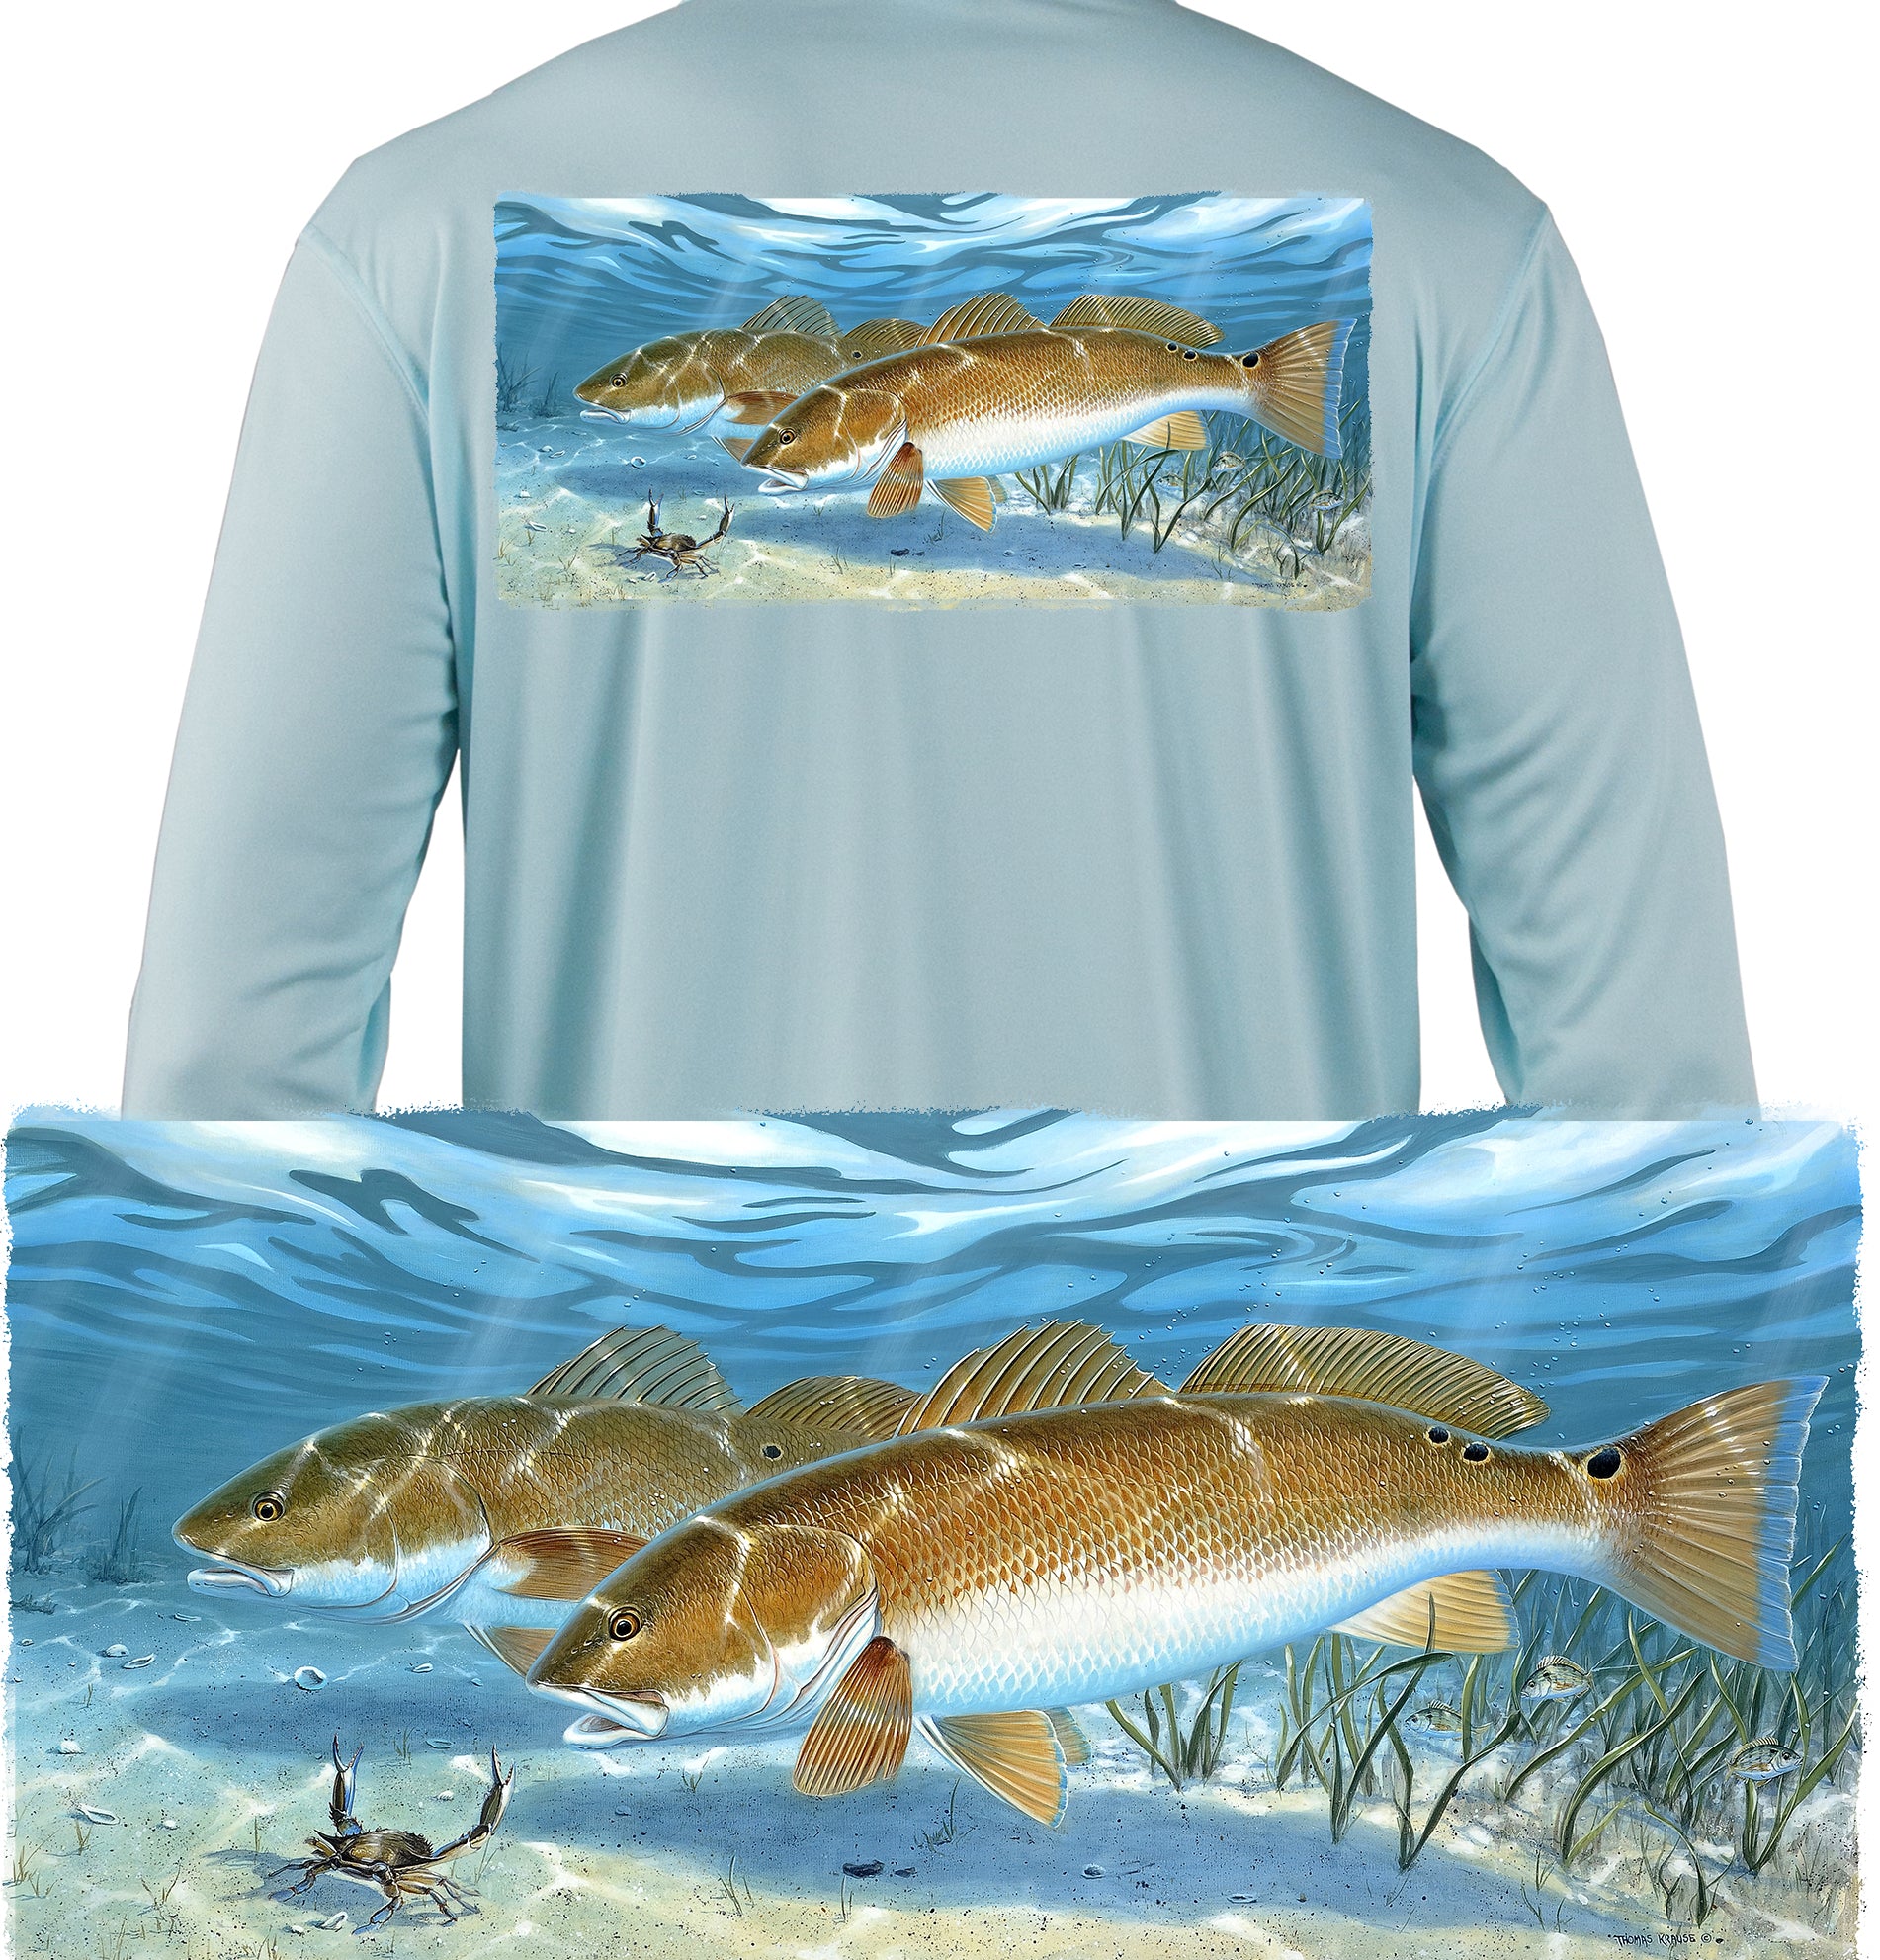 Redfish Hunting Blue Crab Fishing Shirts Men's Quick Dry Lightweight U